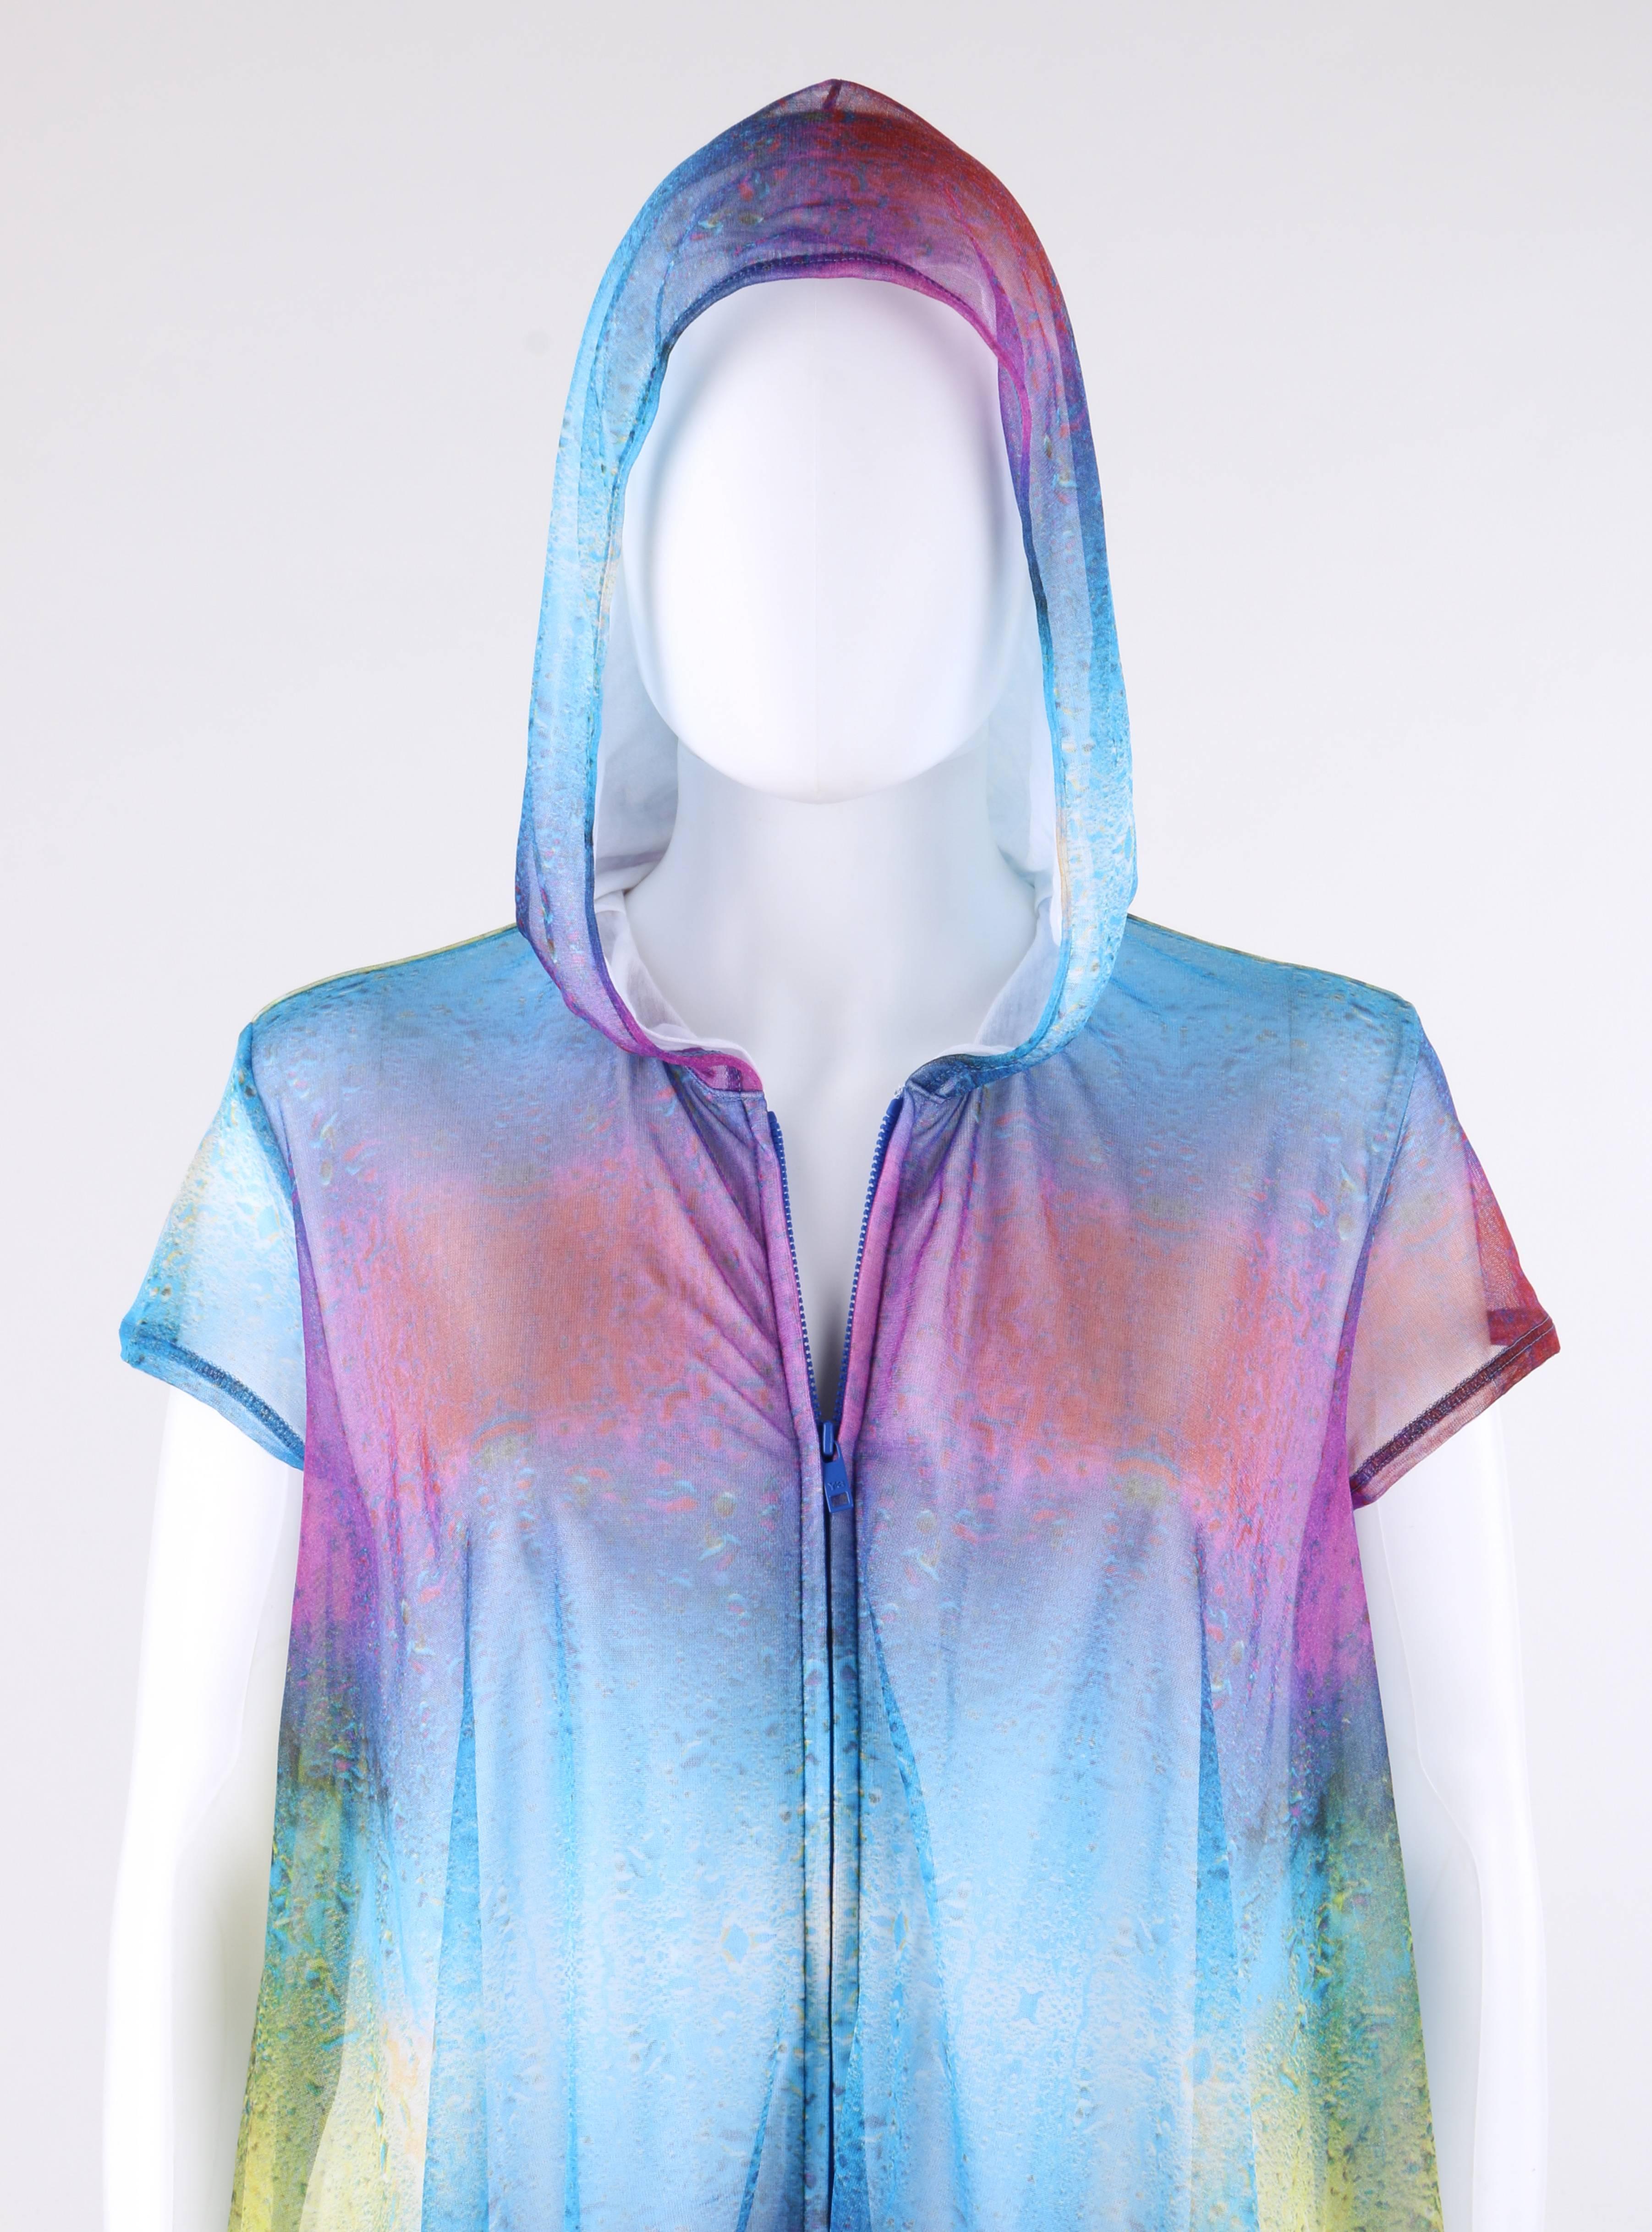 Purple Y-3 YOHJI YAMAMOTO S/S 2014 Abstract Print Mesh Hooded Bubble Hem Jacket / Dress